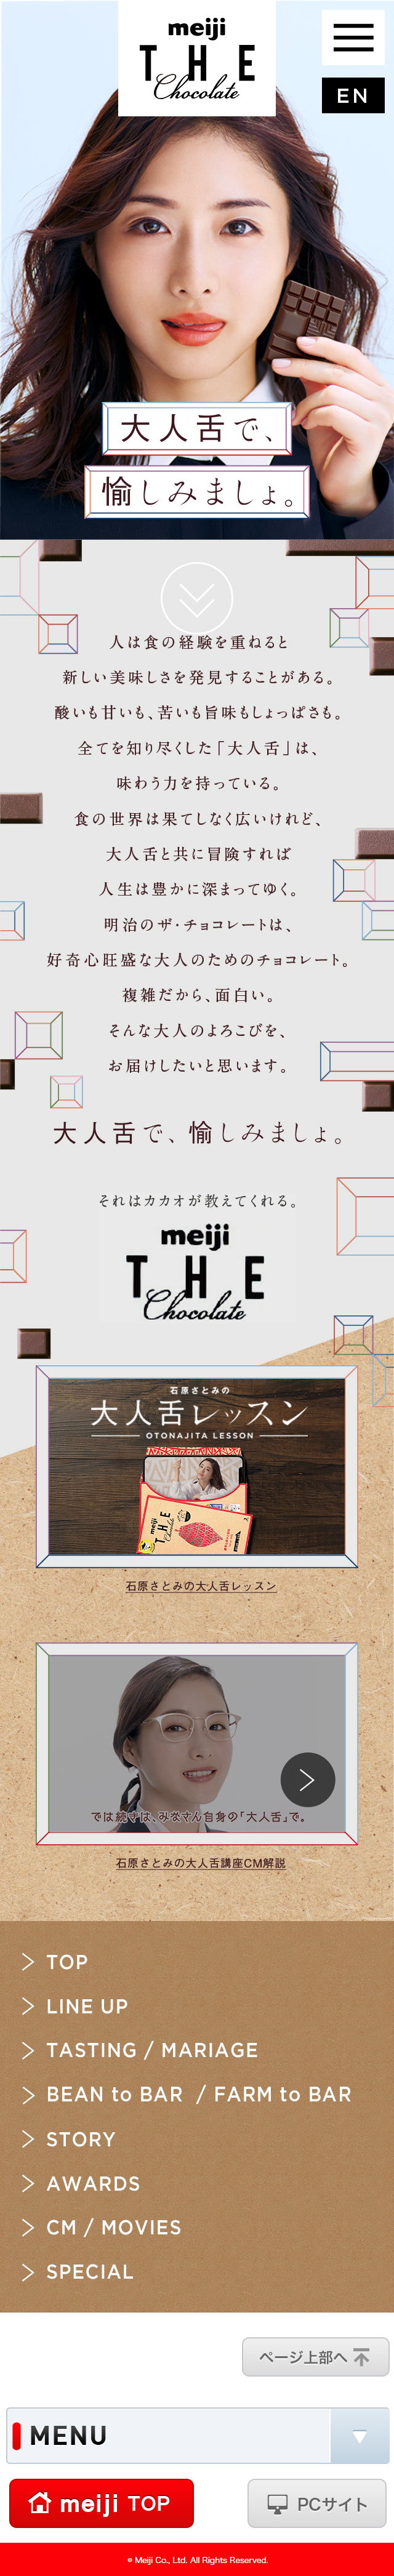 meiji THE Chocolate_sp_1